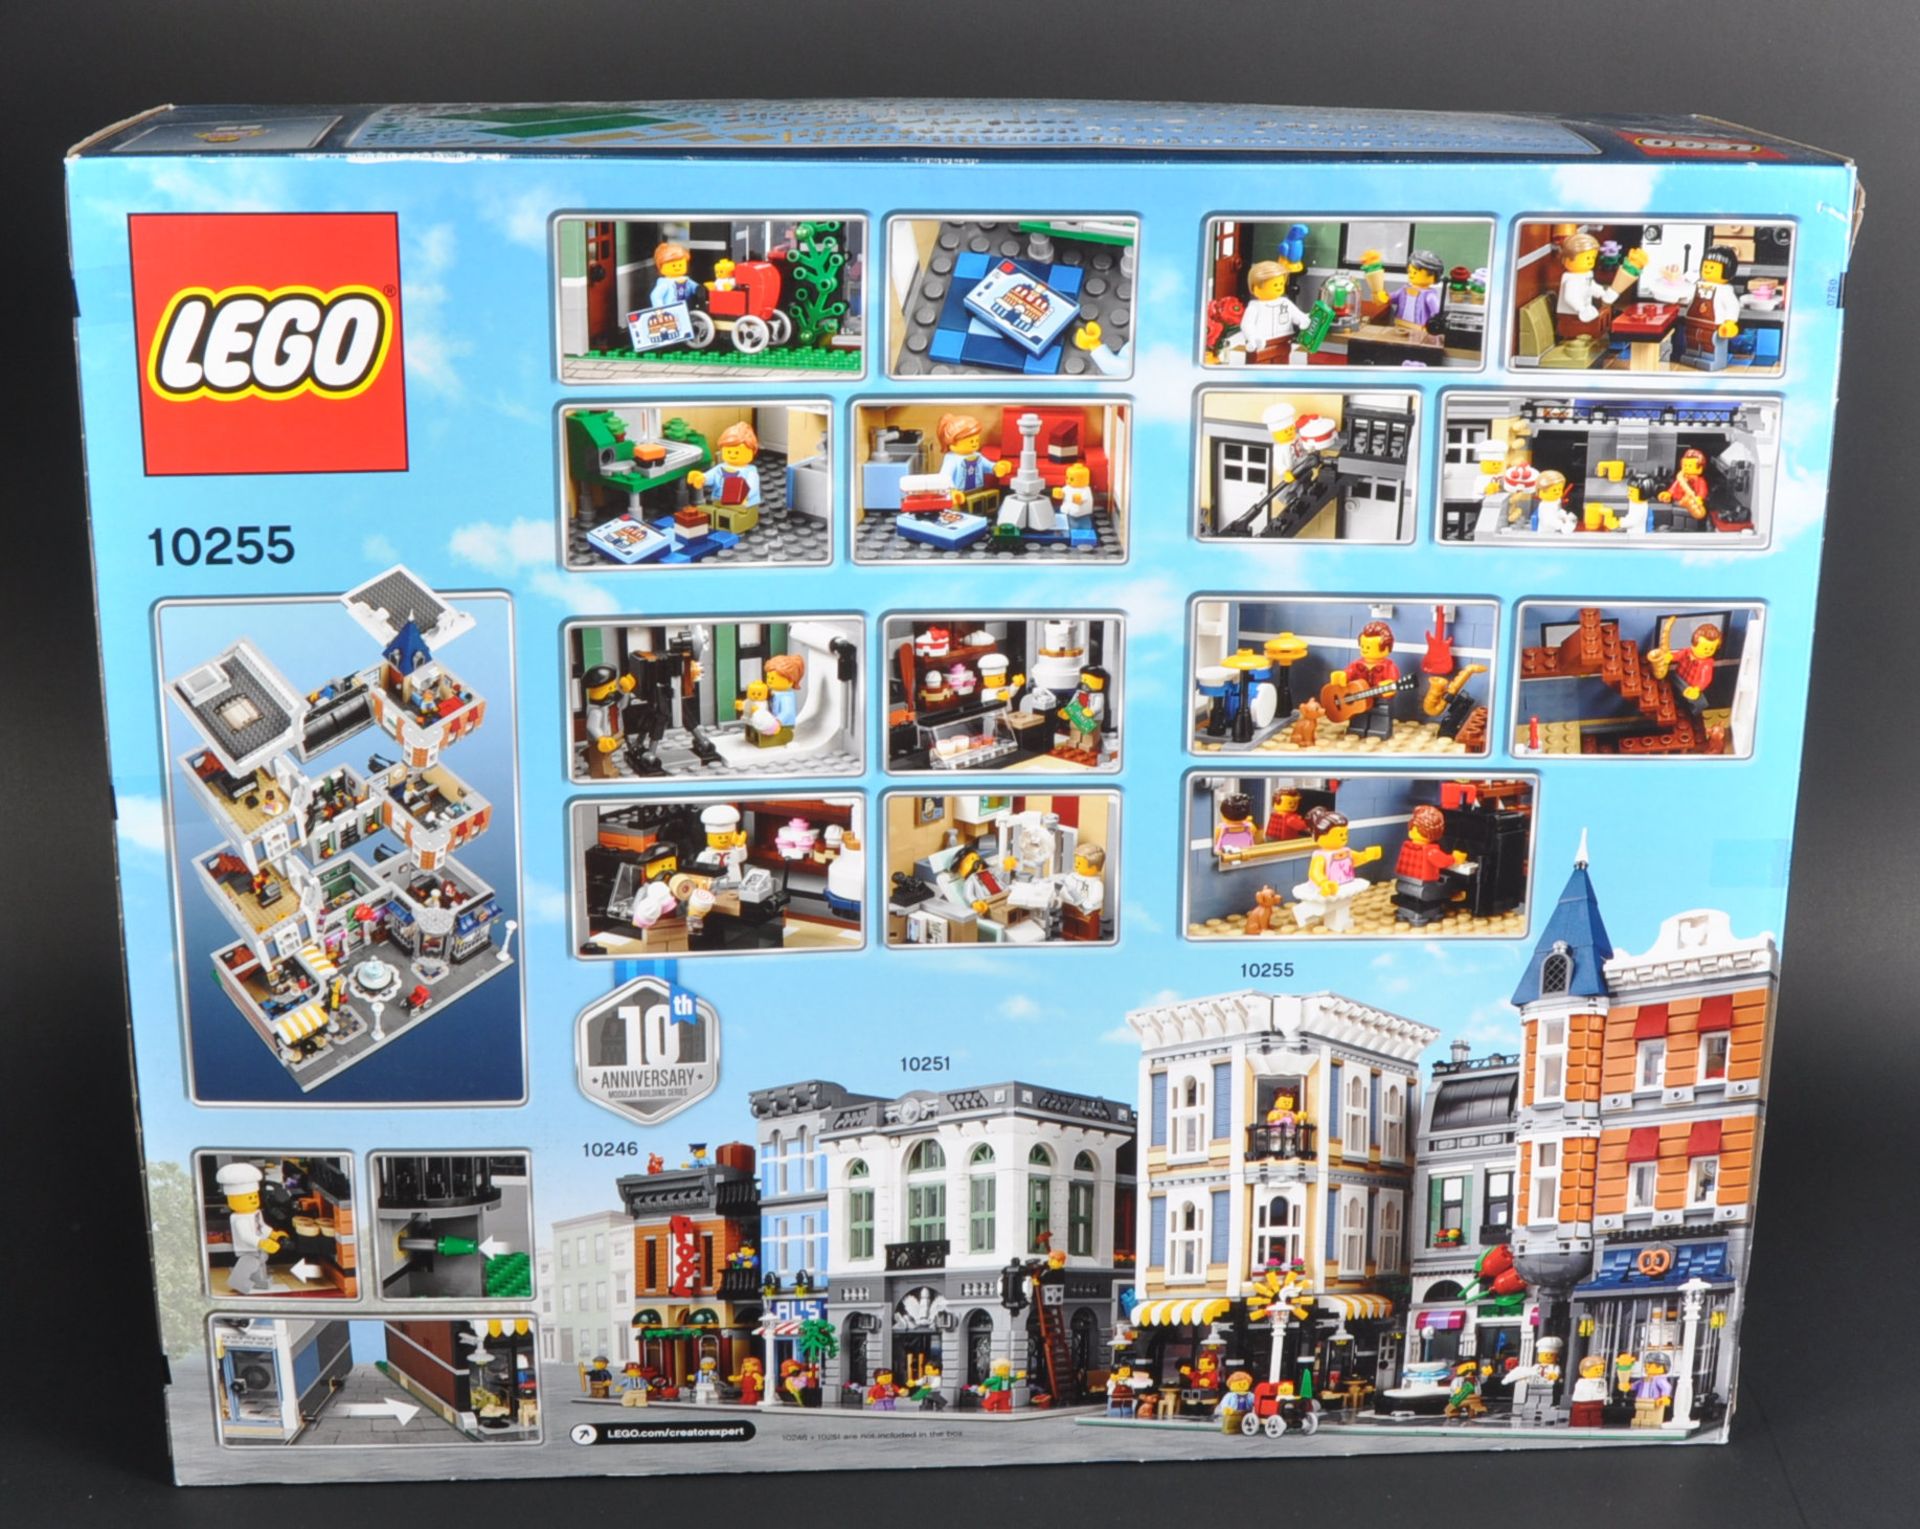 LEGO SET - CREATOR - 10255 - ASSEMBLY SQUARE - Image 2 of 3